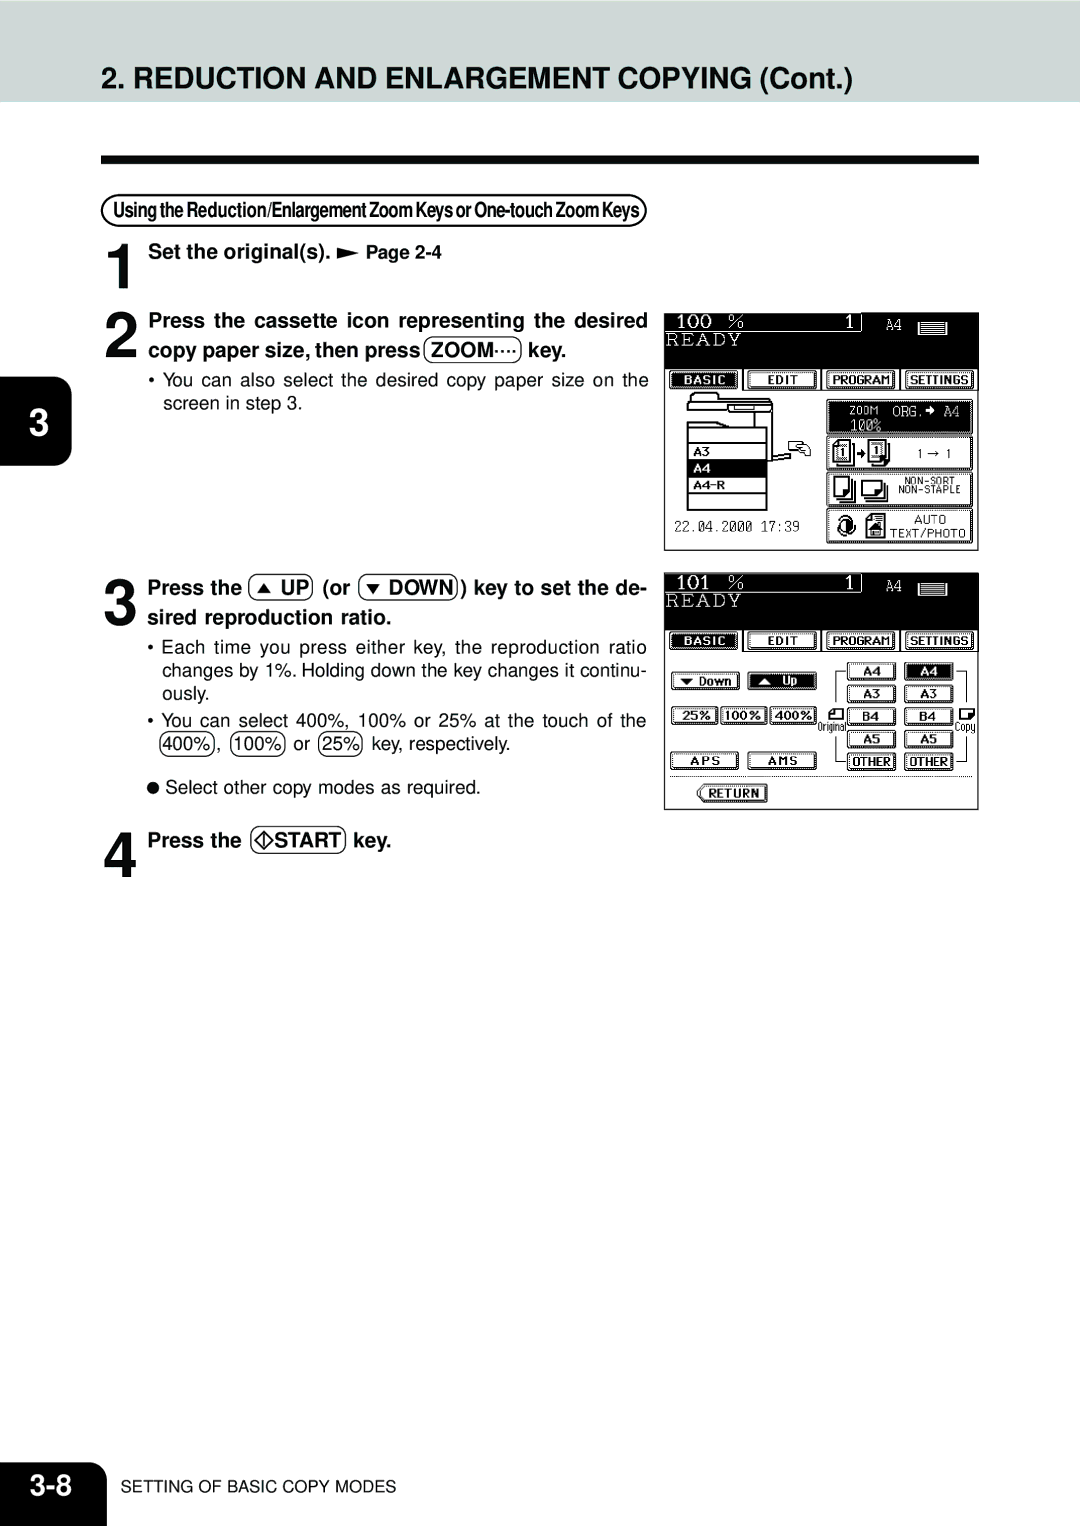 Toshiba e-STUDIO35, e-STUDIO45 manual Reduction and Enlargement Copying 